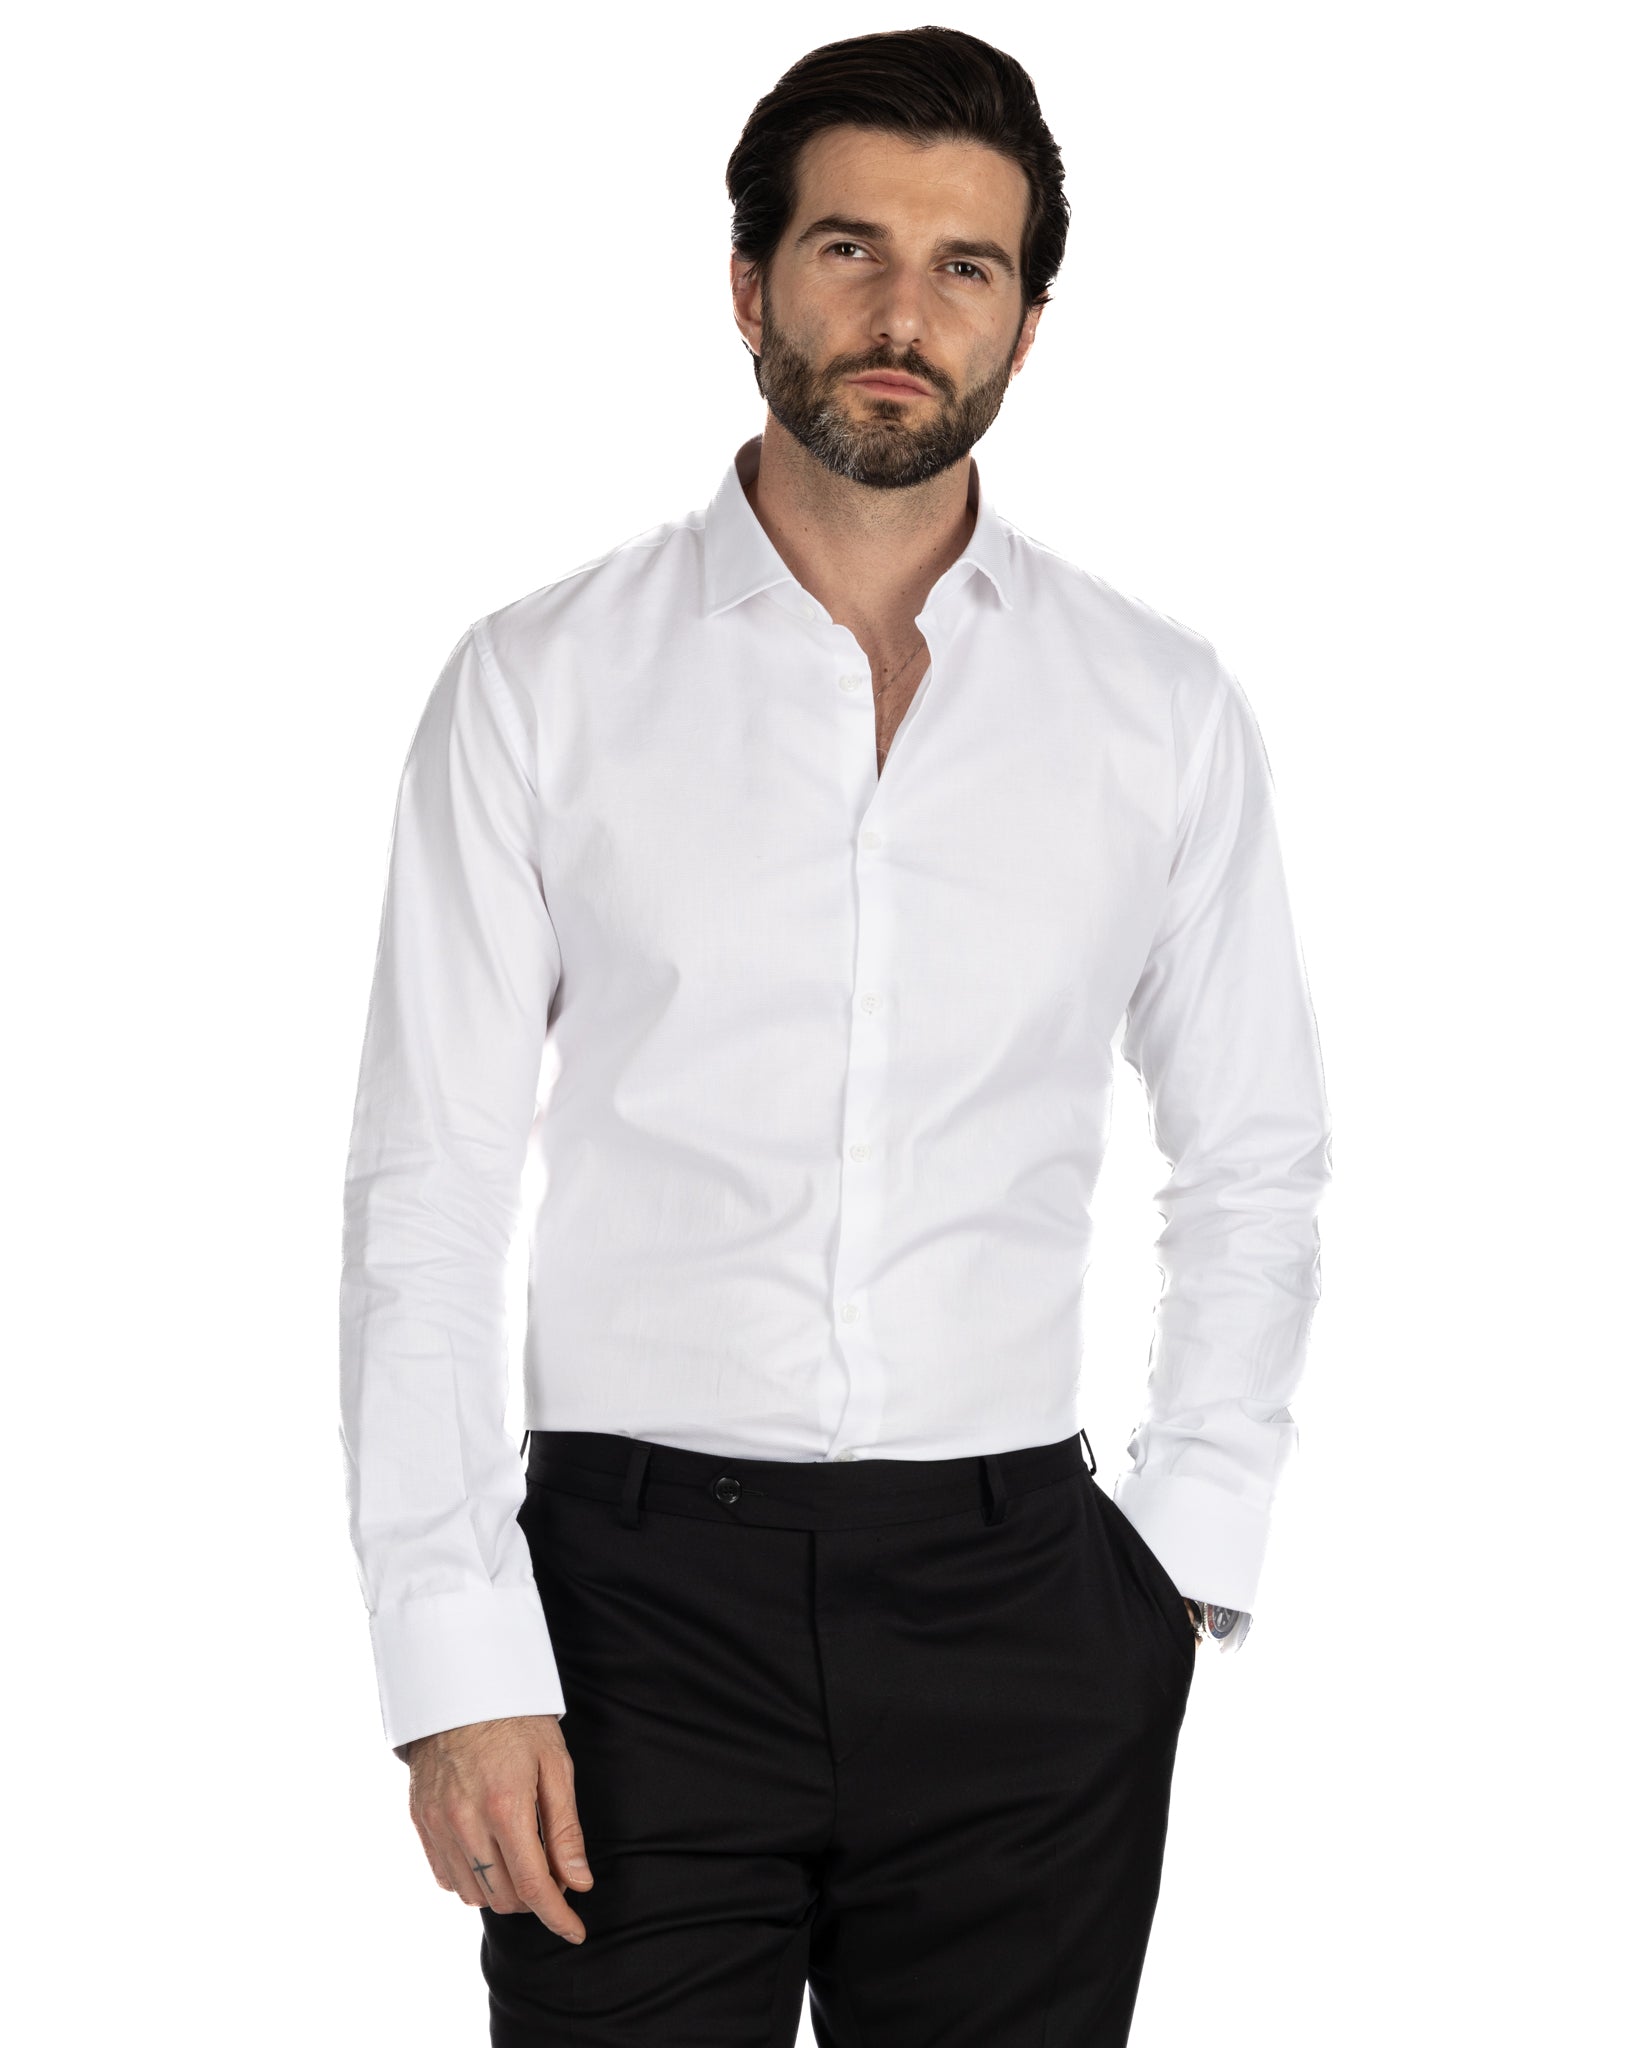 Shirt - slim fit white oxford